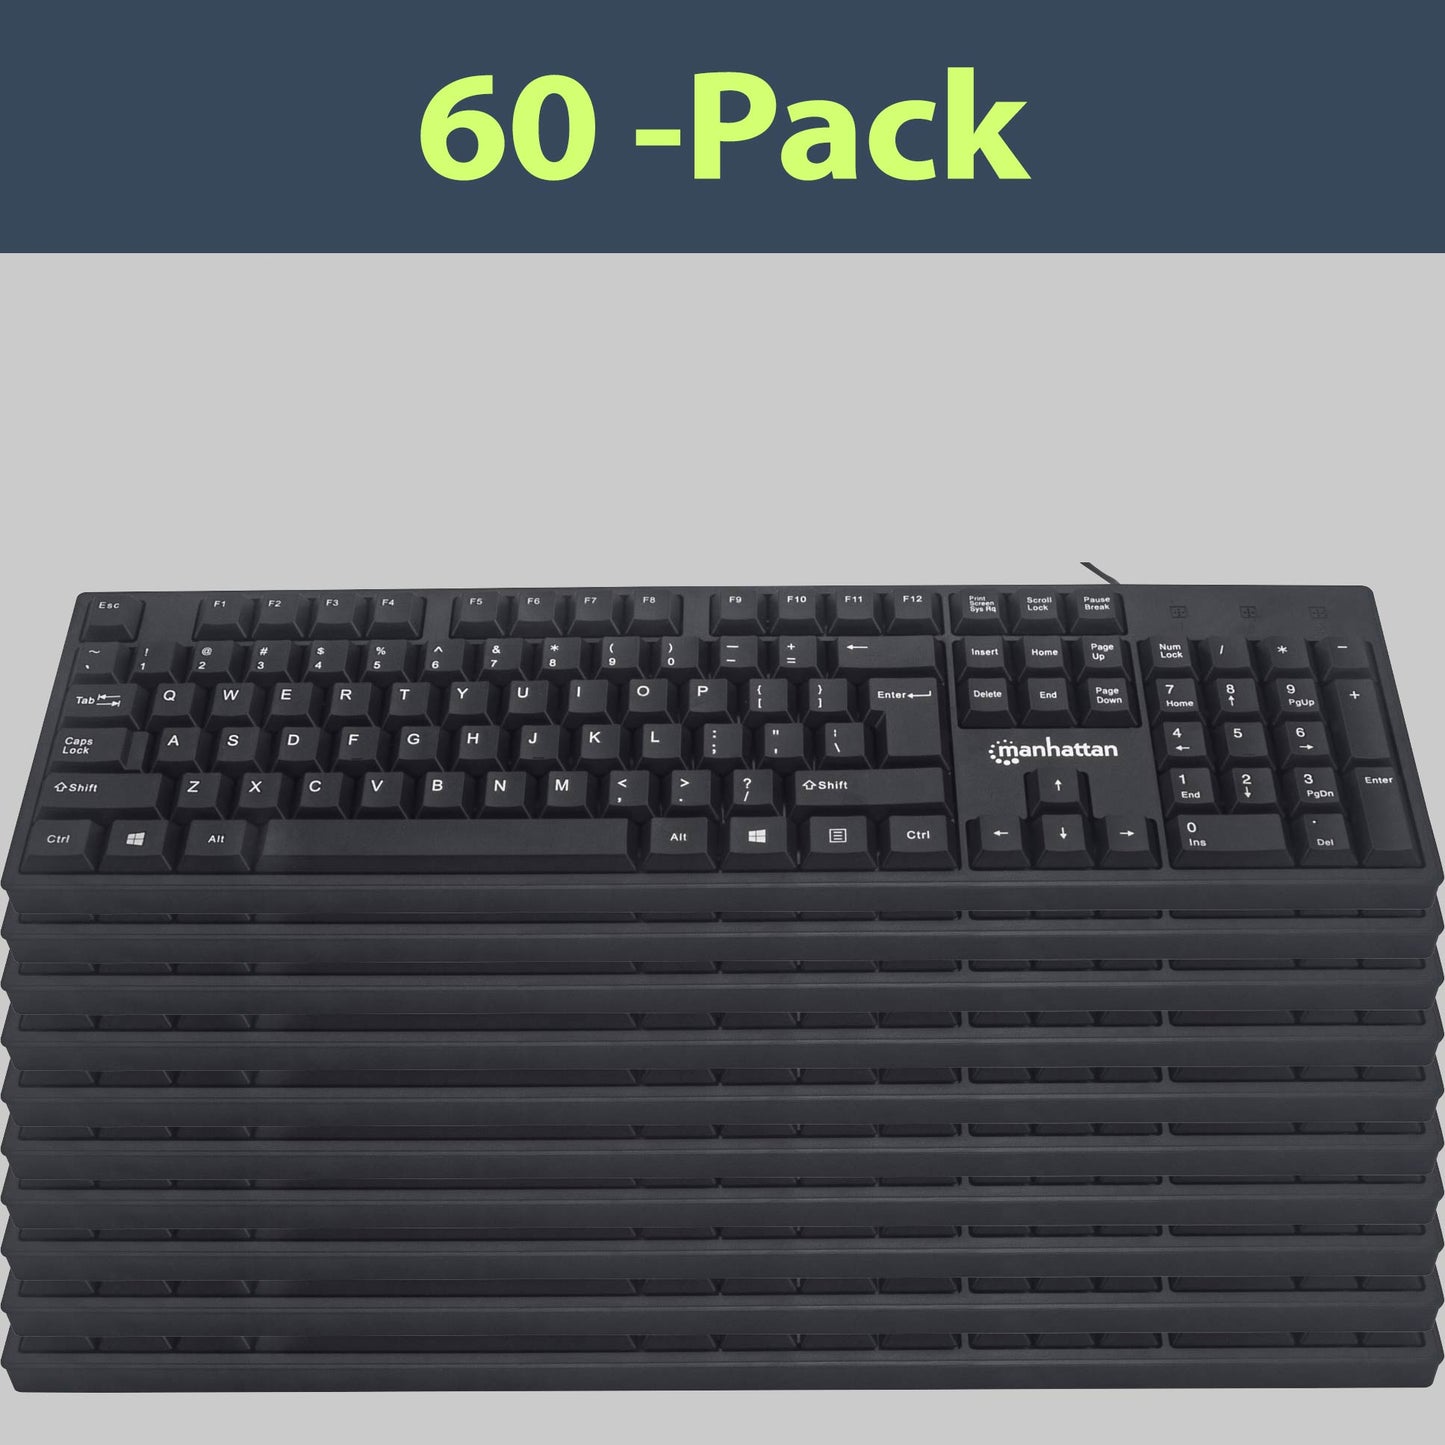 Wired Computer Full Size USB Keyboard, Bulk Buy, Black, for Windows, PC, Laptop - 3 Year Warranty